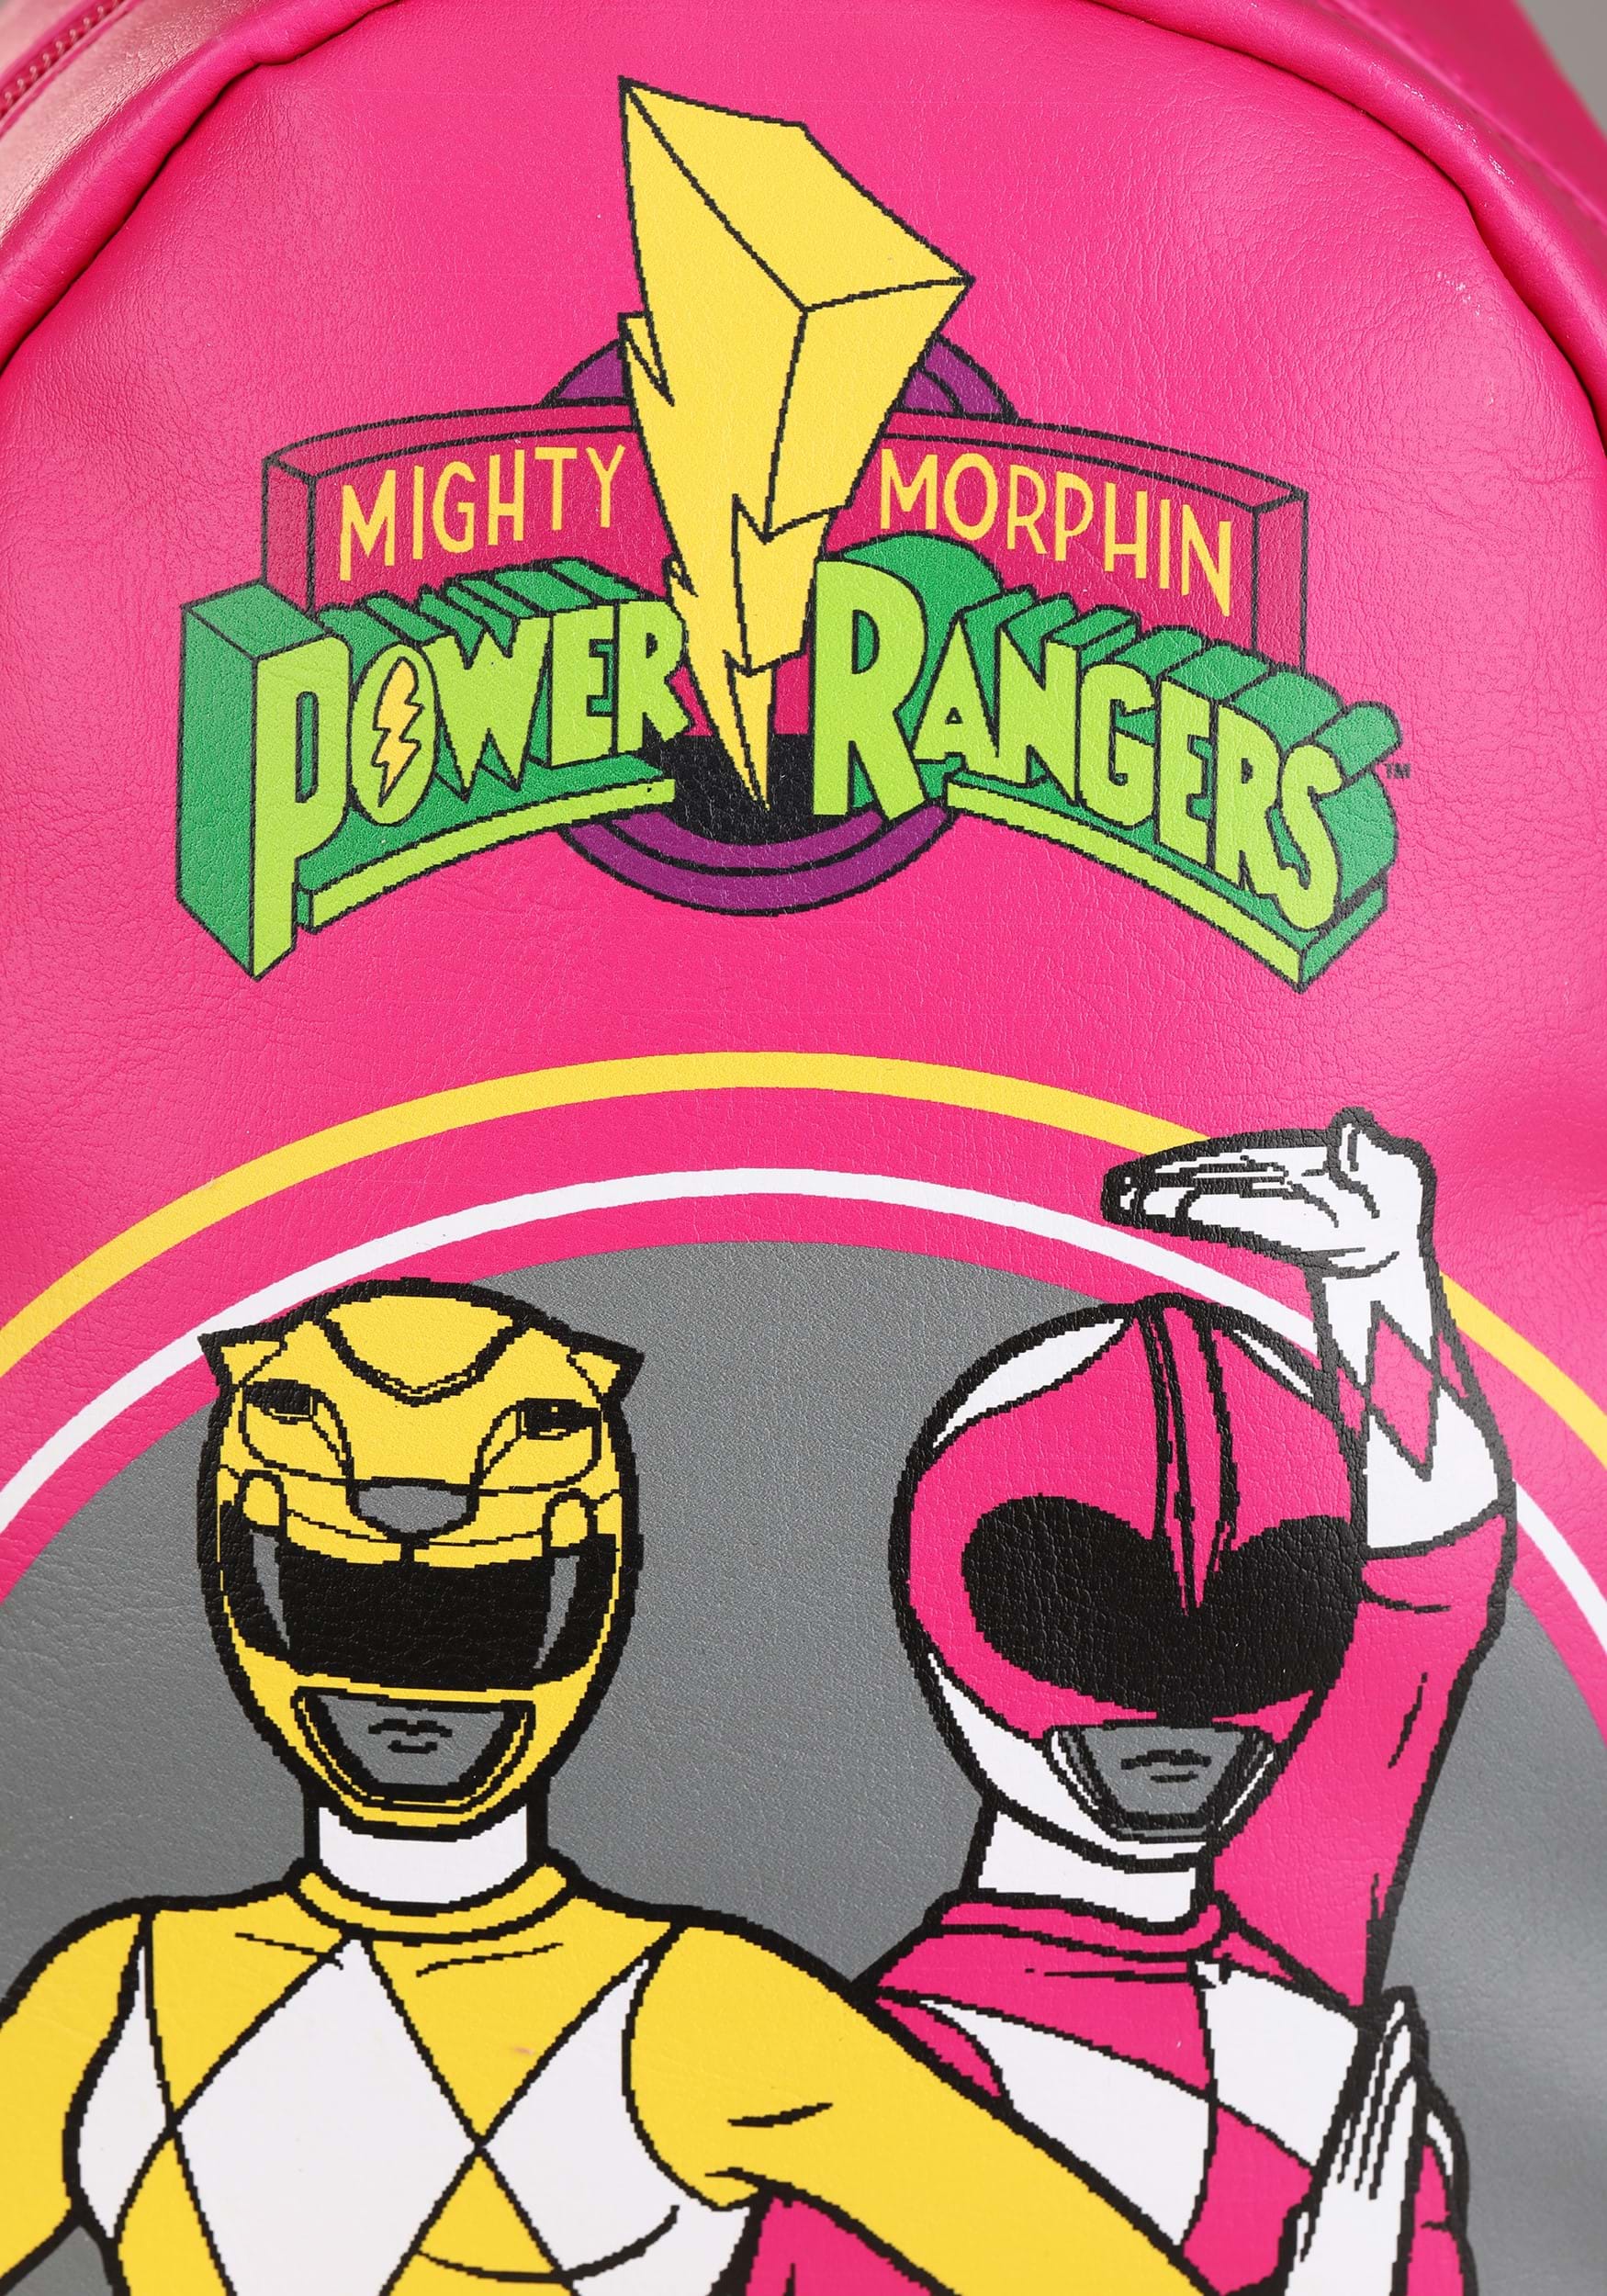 FUN.COM Power Rangers Mini Backpack Standard